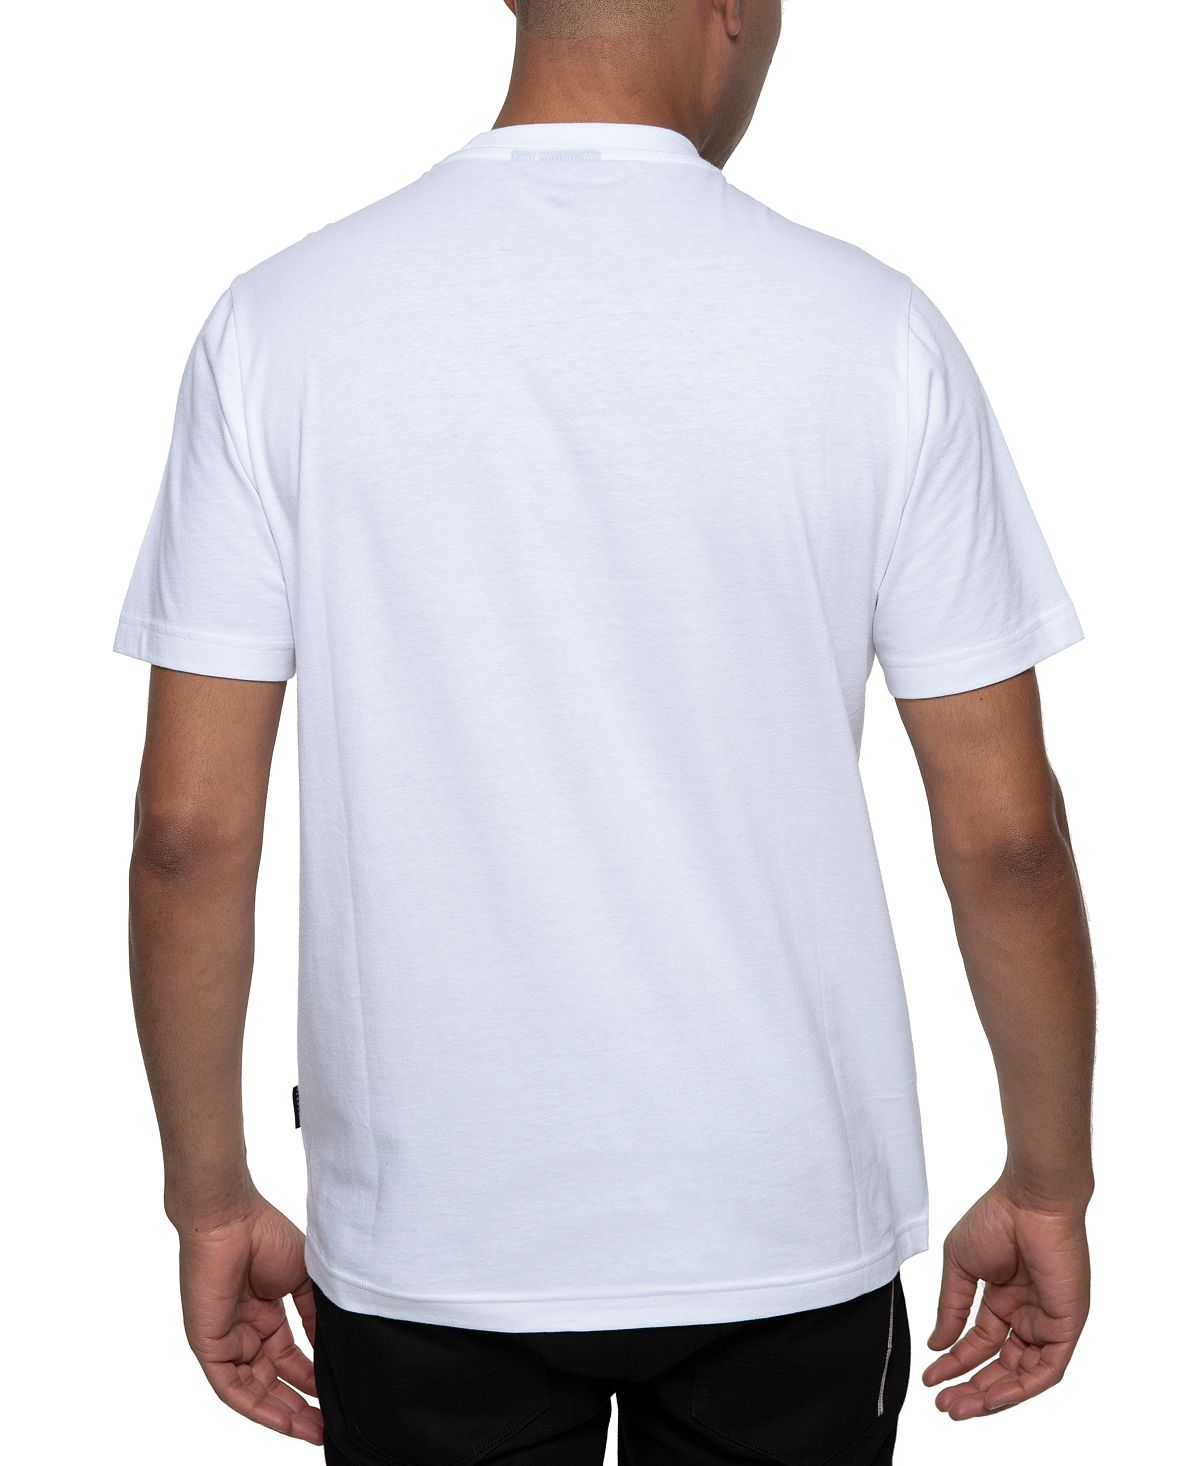 Sean John Beaded Dream Big Tiger T-shirt Bright White